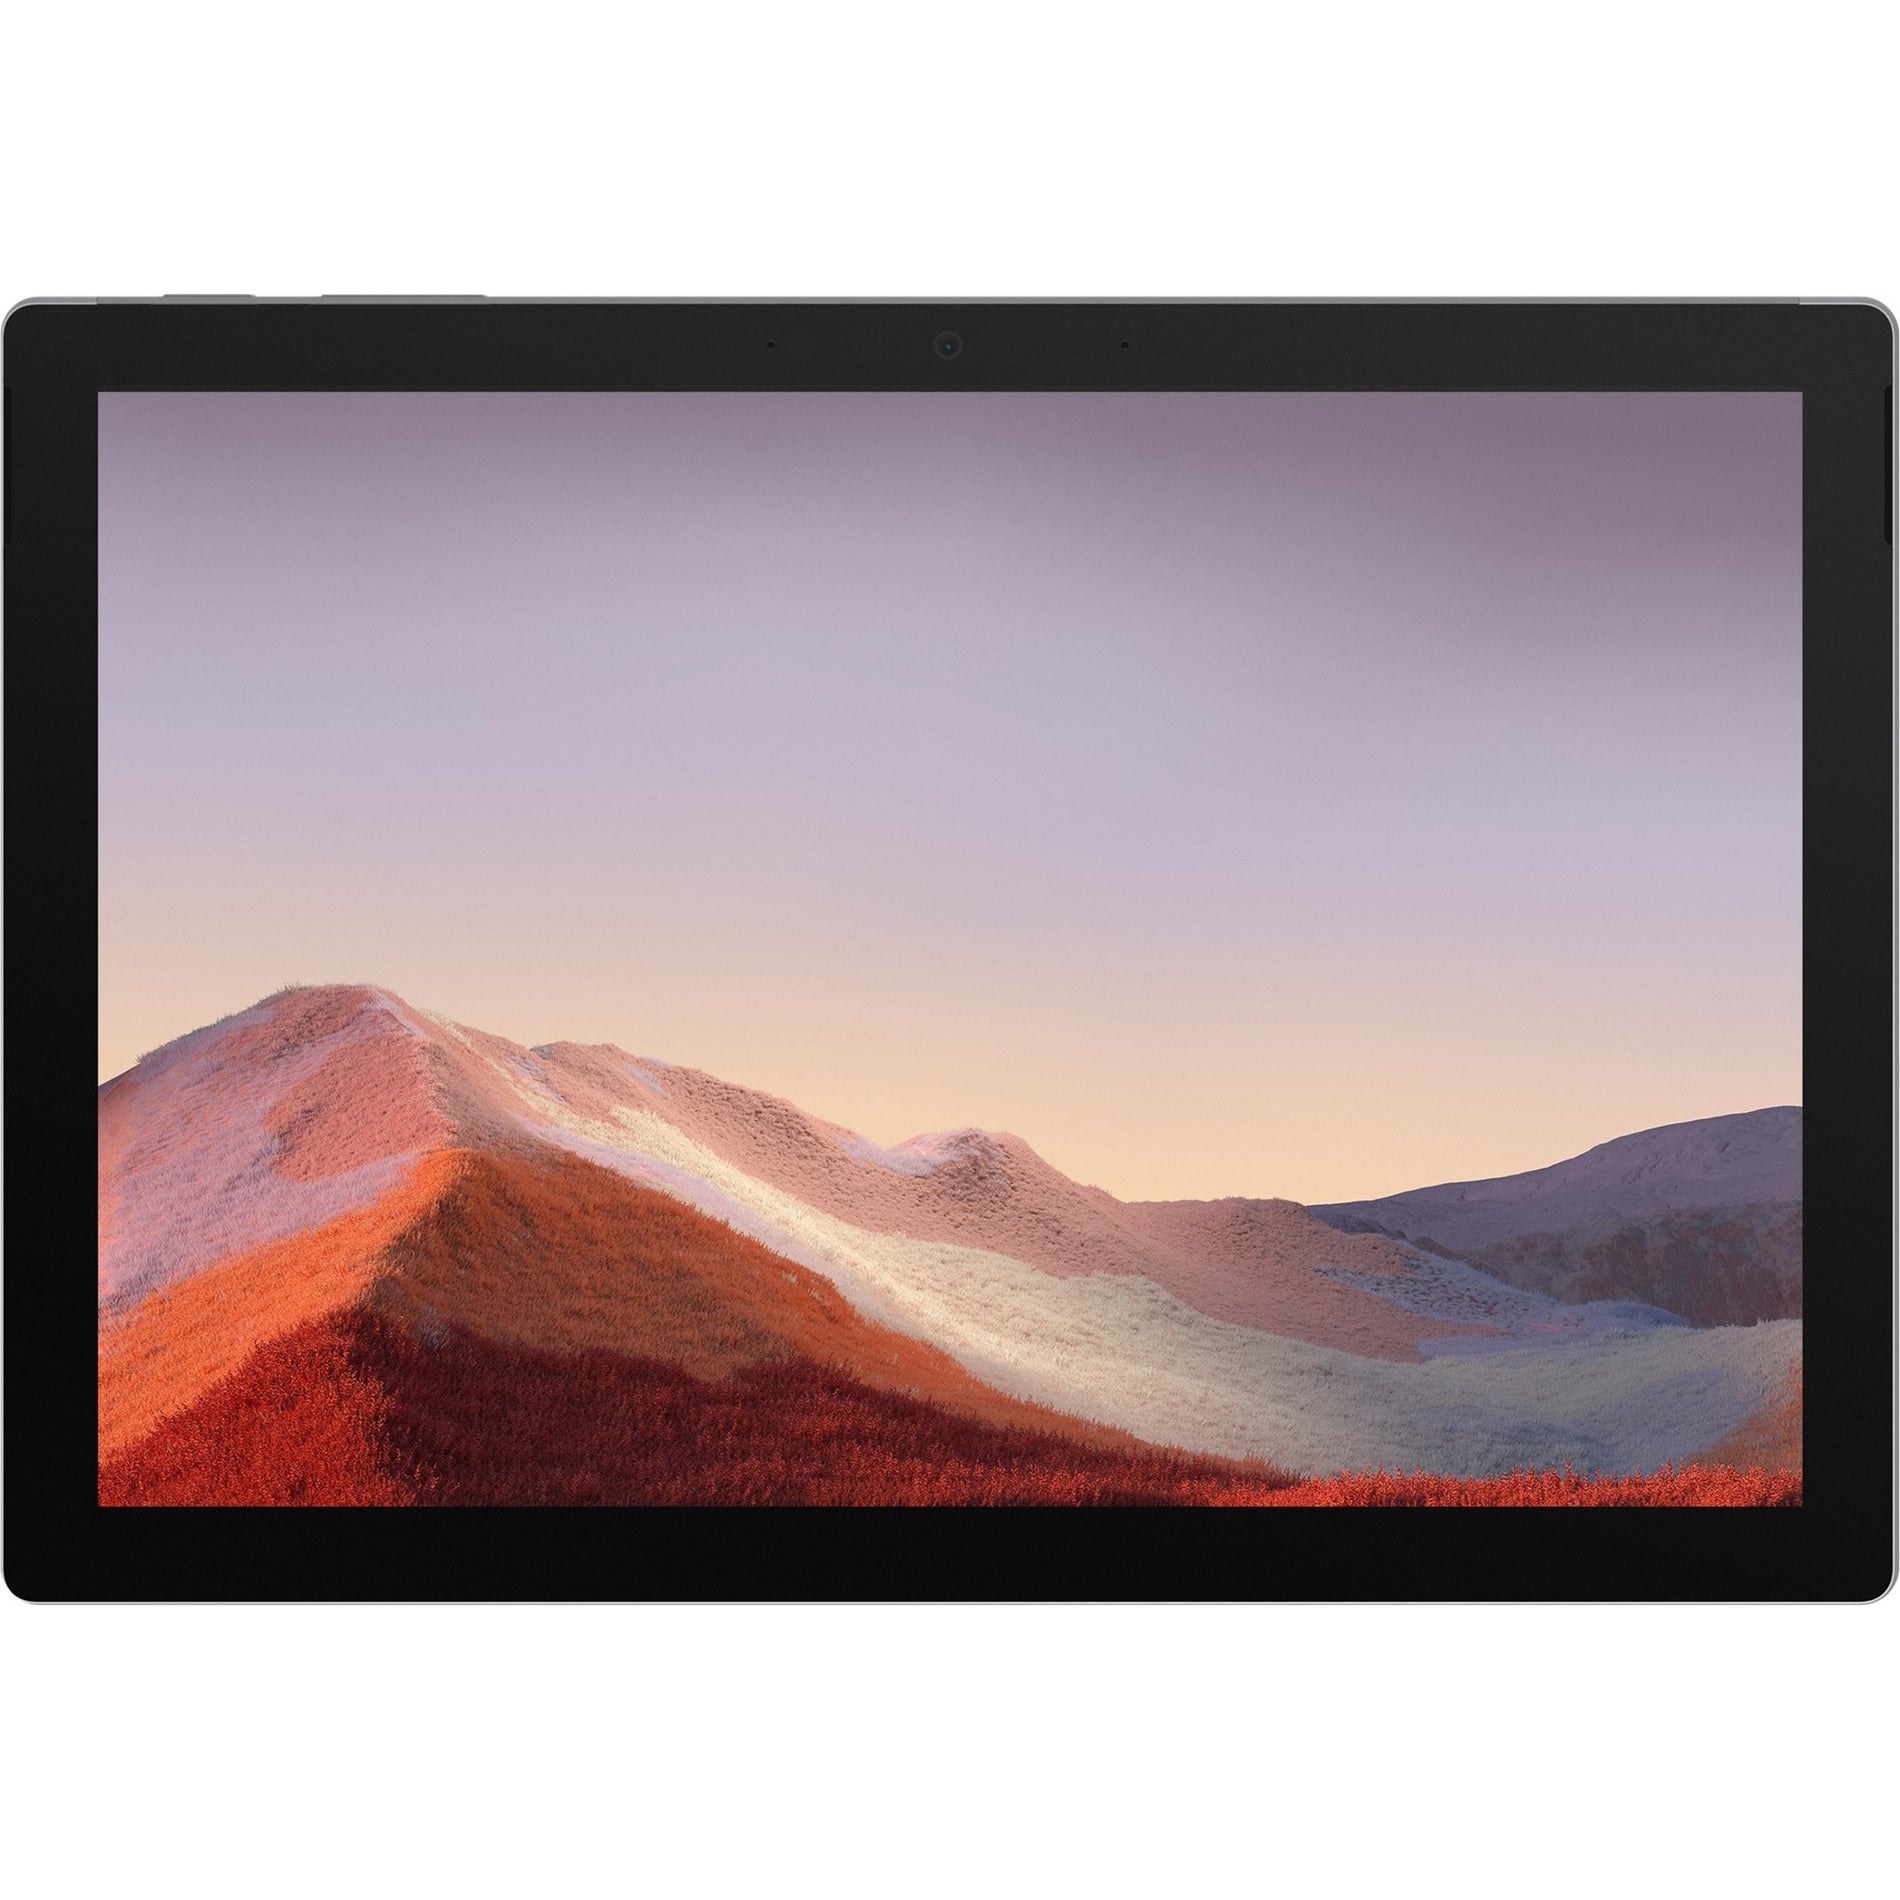 Microsoft VDV-00001 Surface Pro 7 Tablet, 12.3" PixelSense Display, Core i5, 8GB RAM, 128GB SSD, Windows 10 Home